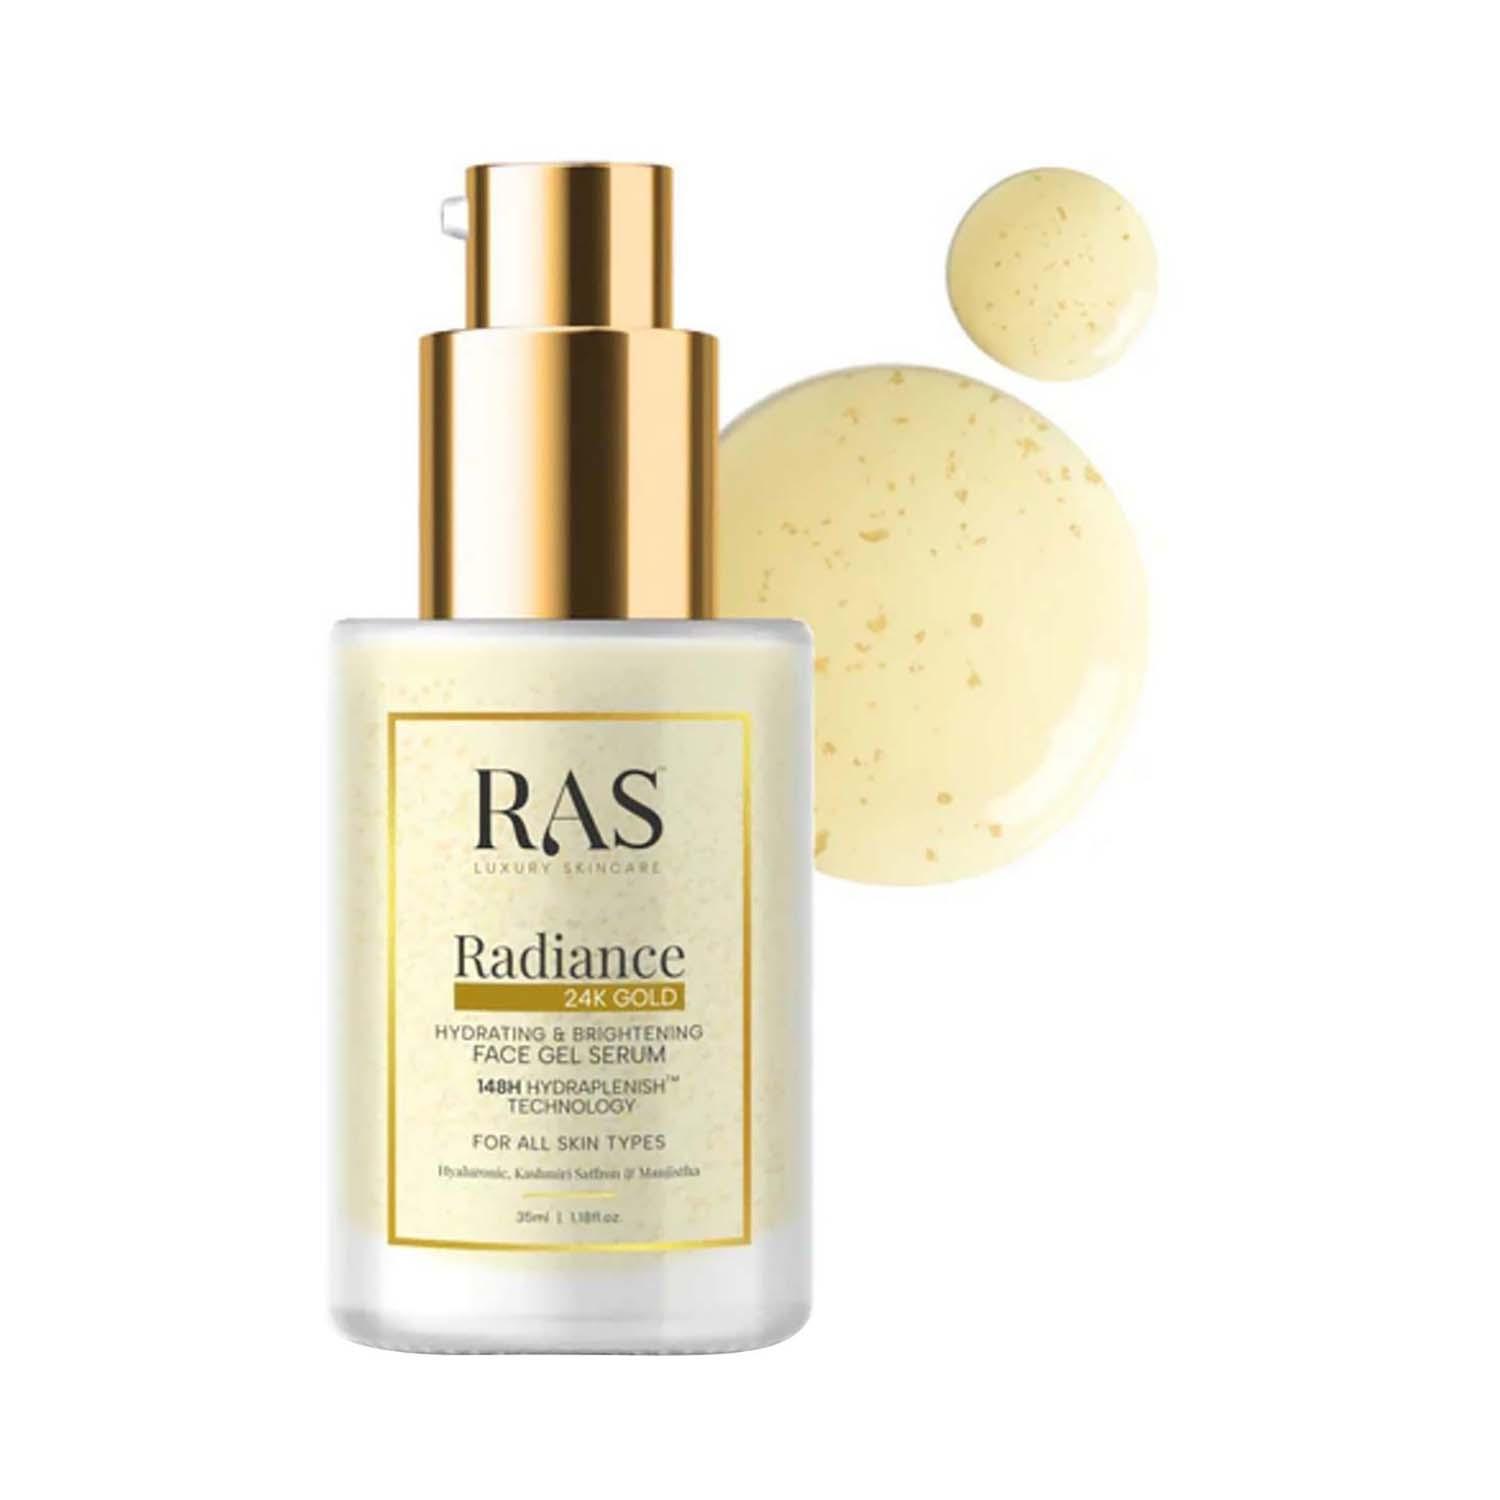 Ras Luxury Skincare | Ras Luxury Skincare Radiance 24K Gold Brightening Face Gel Serum (35 ml)